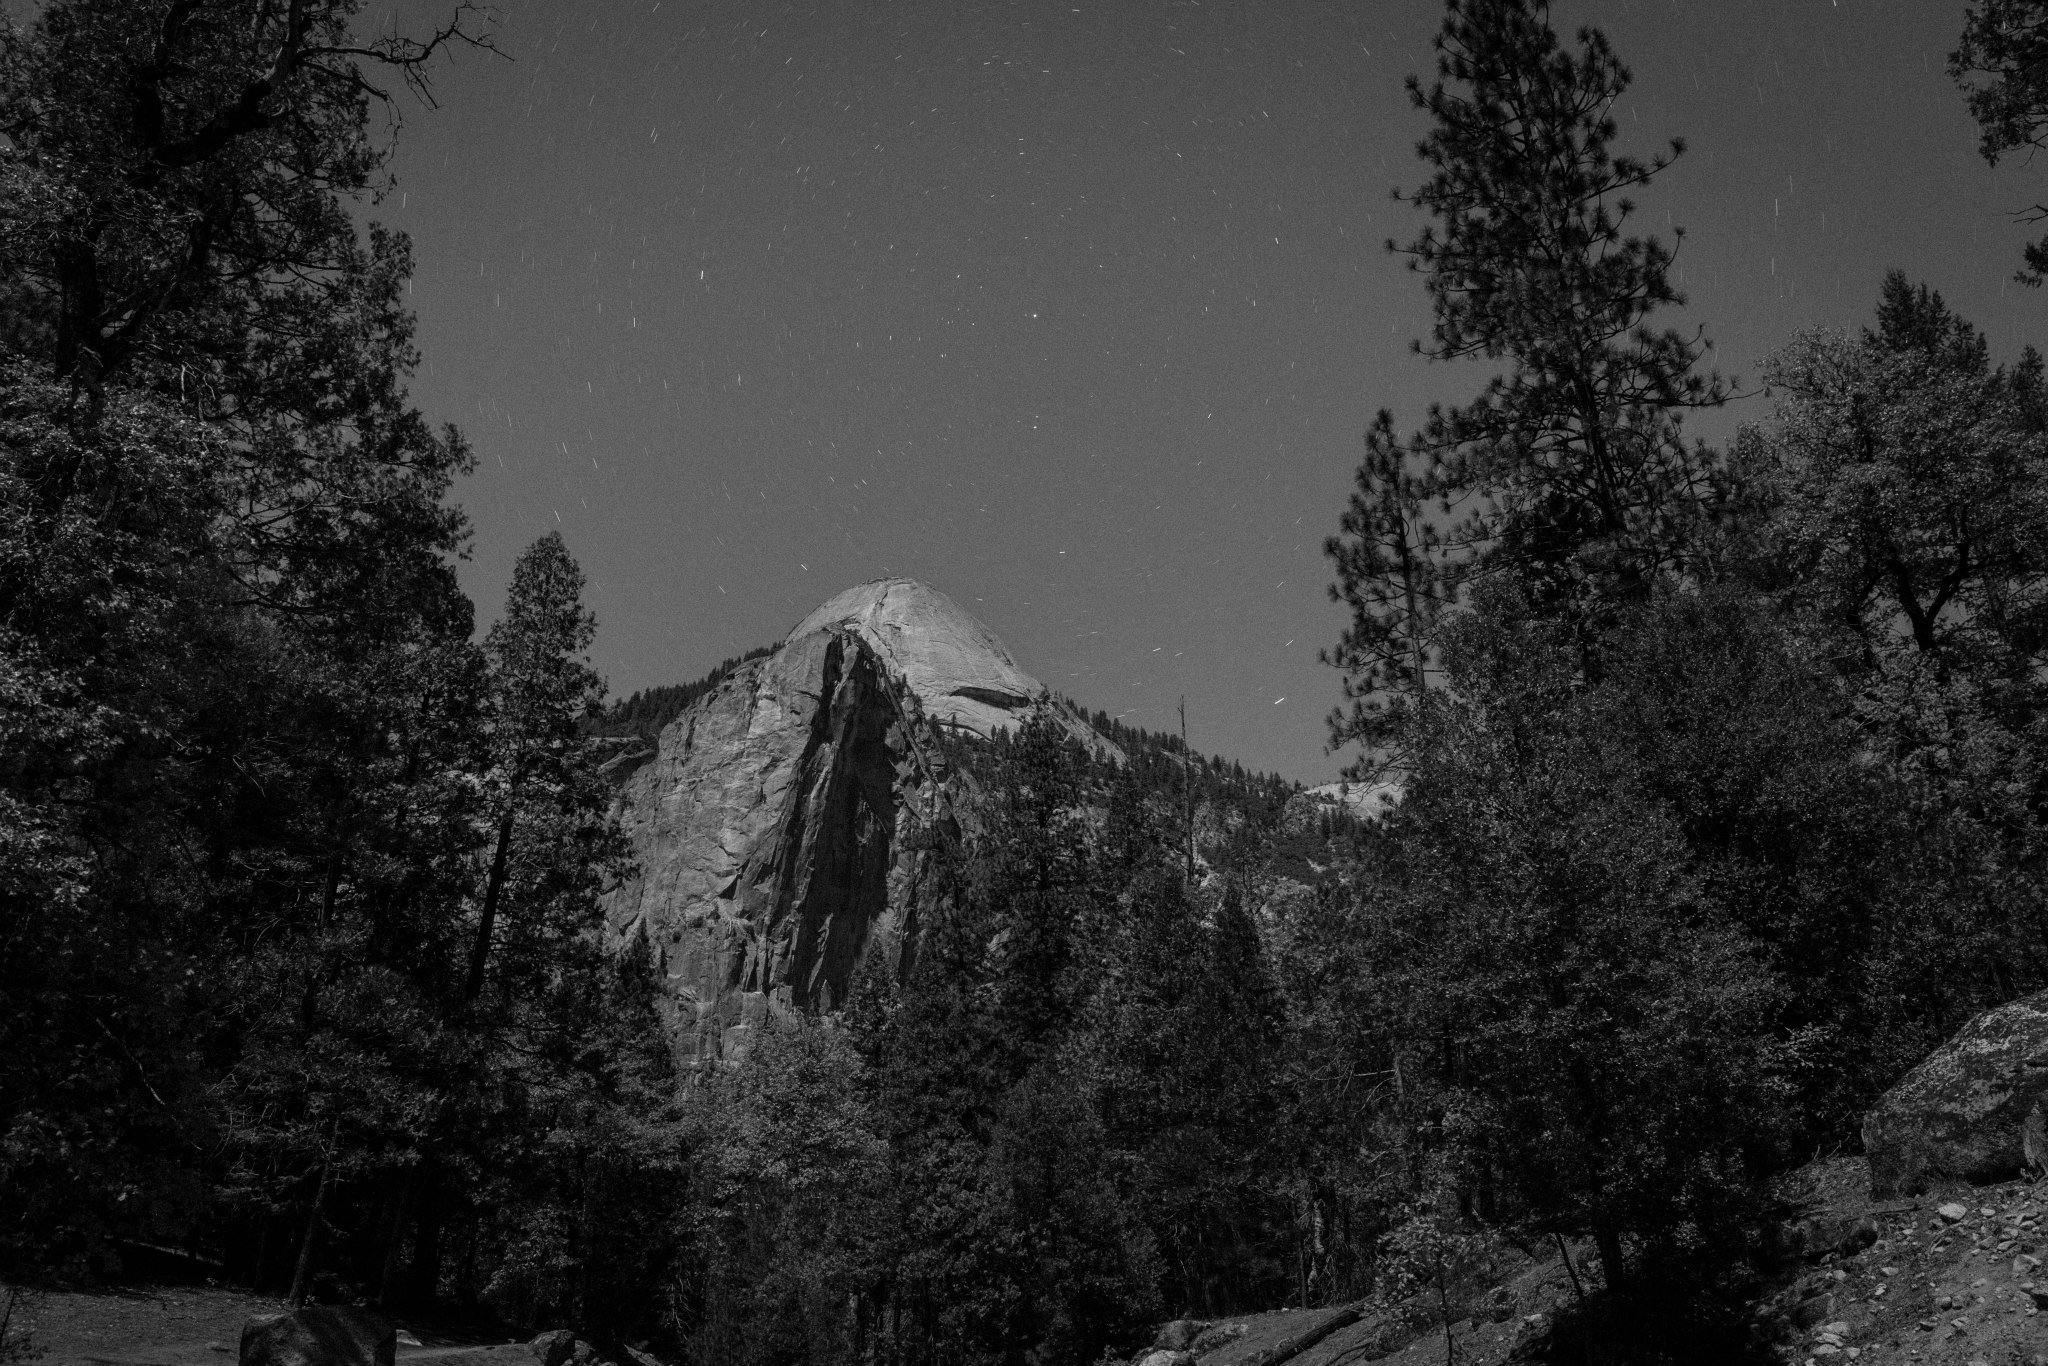 Yosemite at night